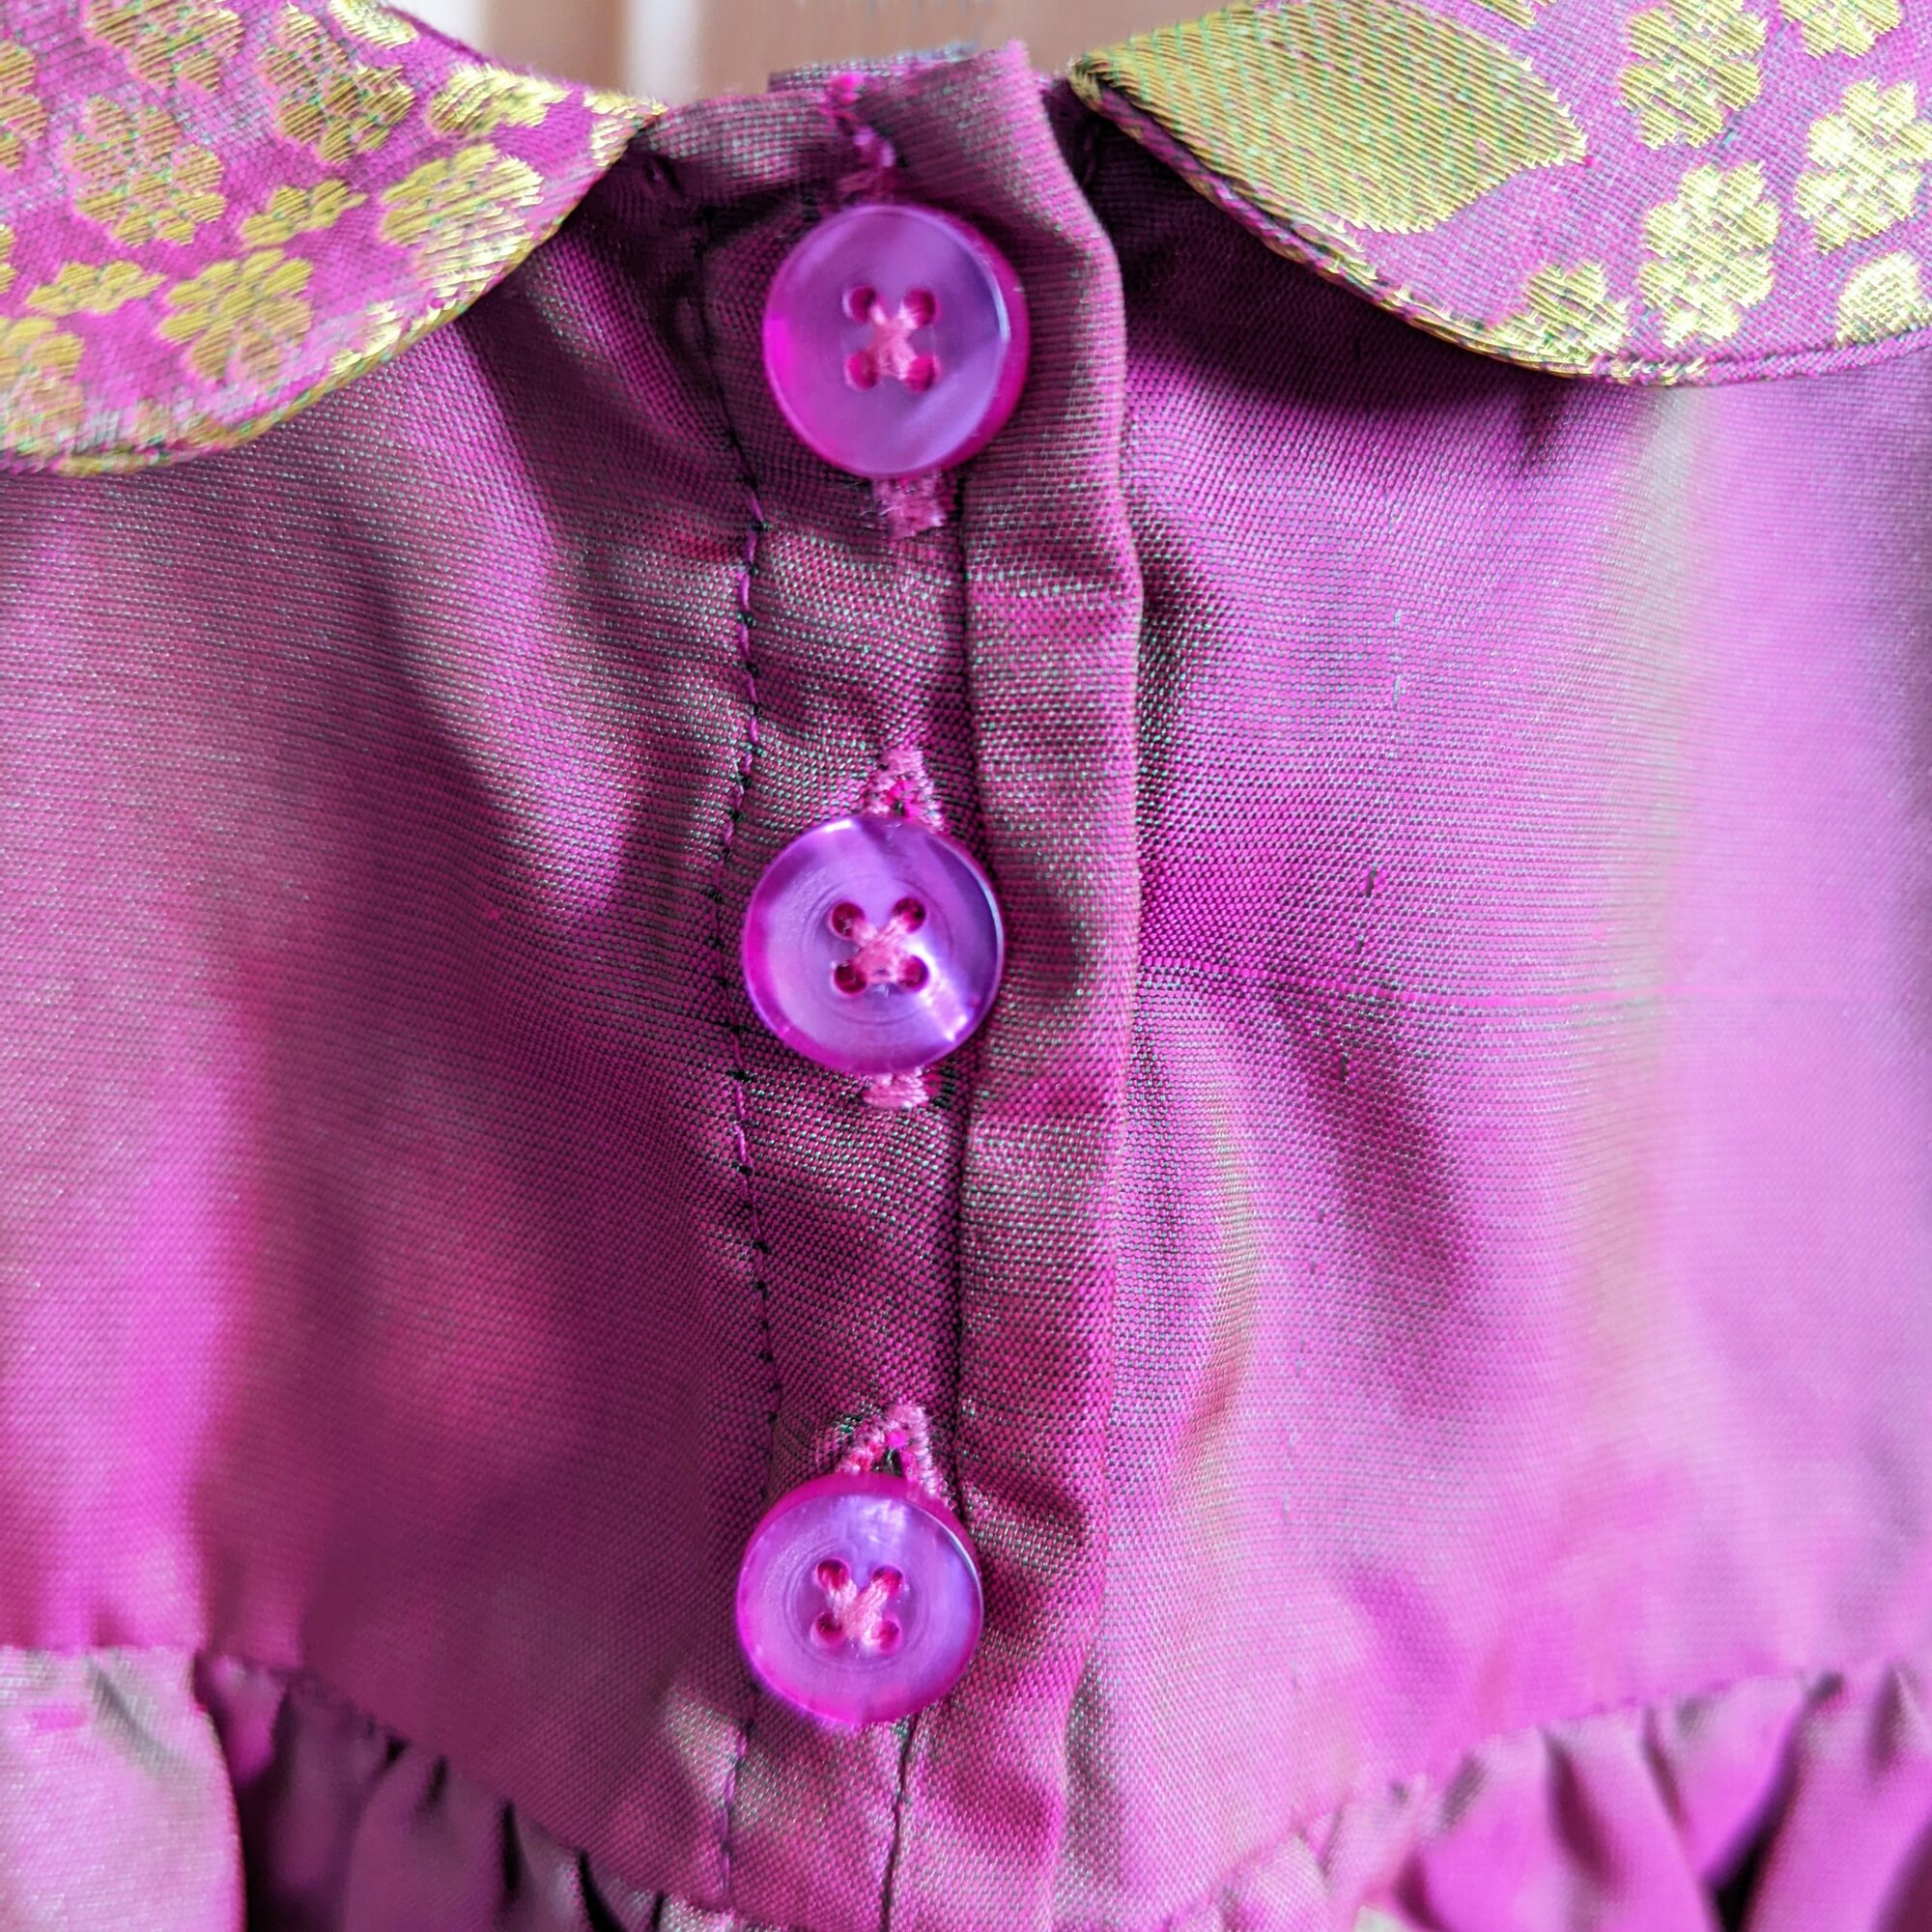 Baby Girl Cerise Dress Shimmer  3-6 Months, 6-12 Months - 3-6 Months